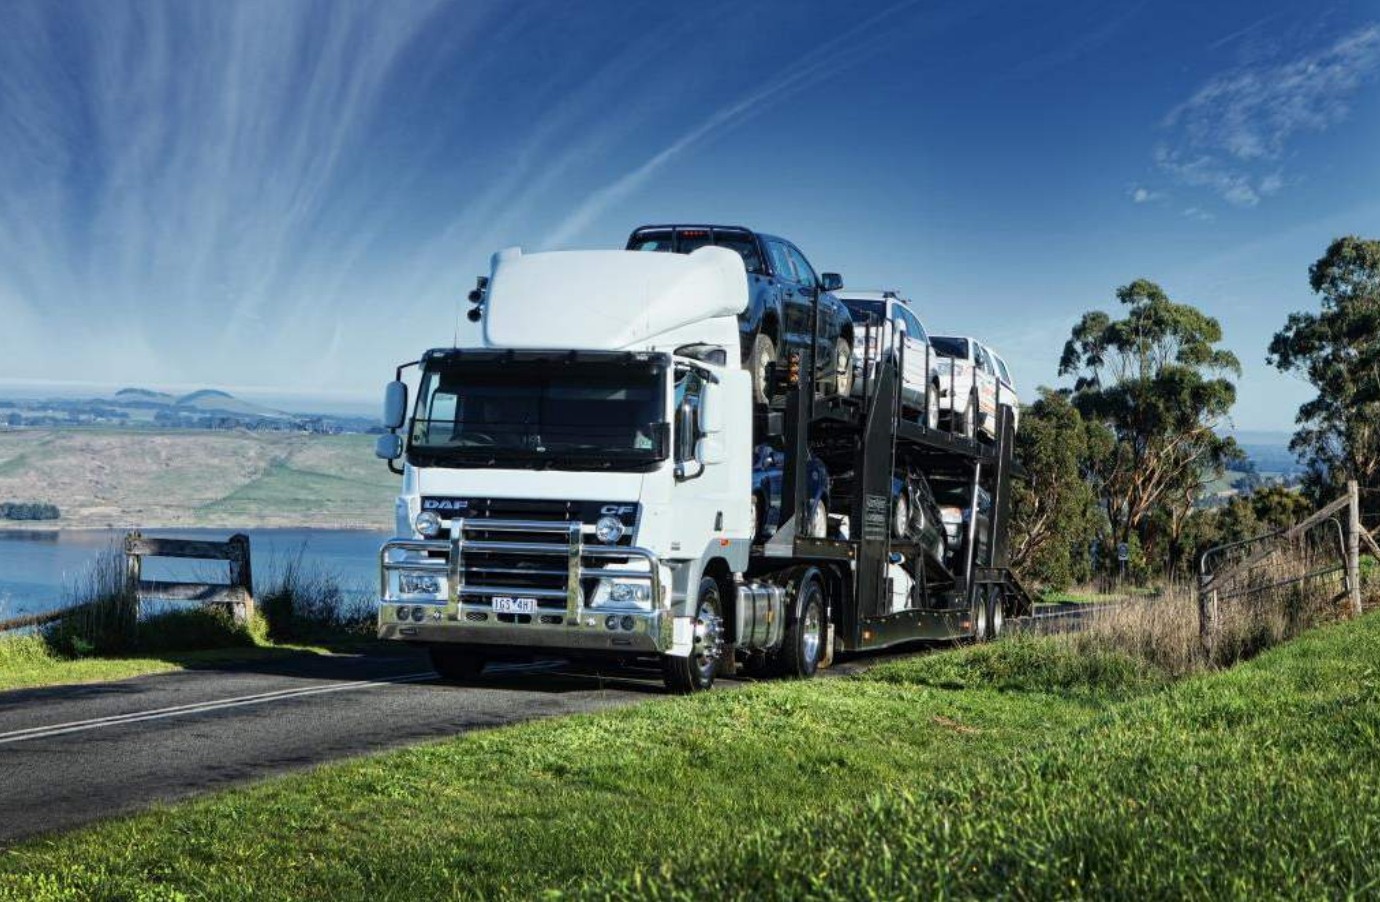 DOUBLE THE VERSATILITY SOUTH WEST CAR CARRIERS DAF Trucks Australia